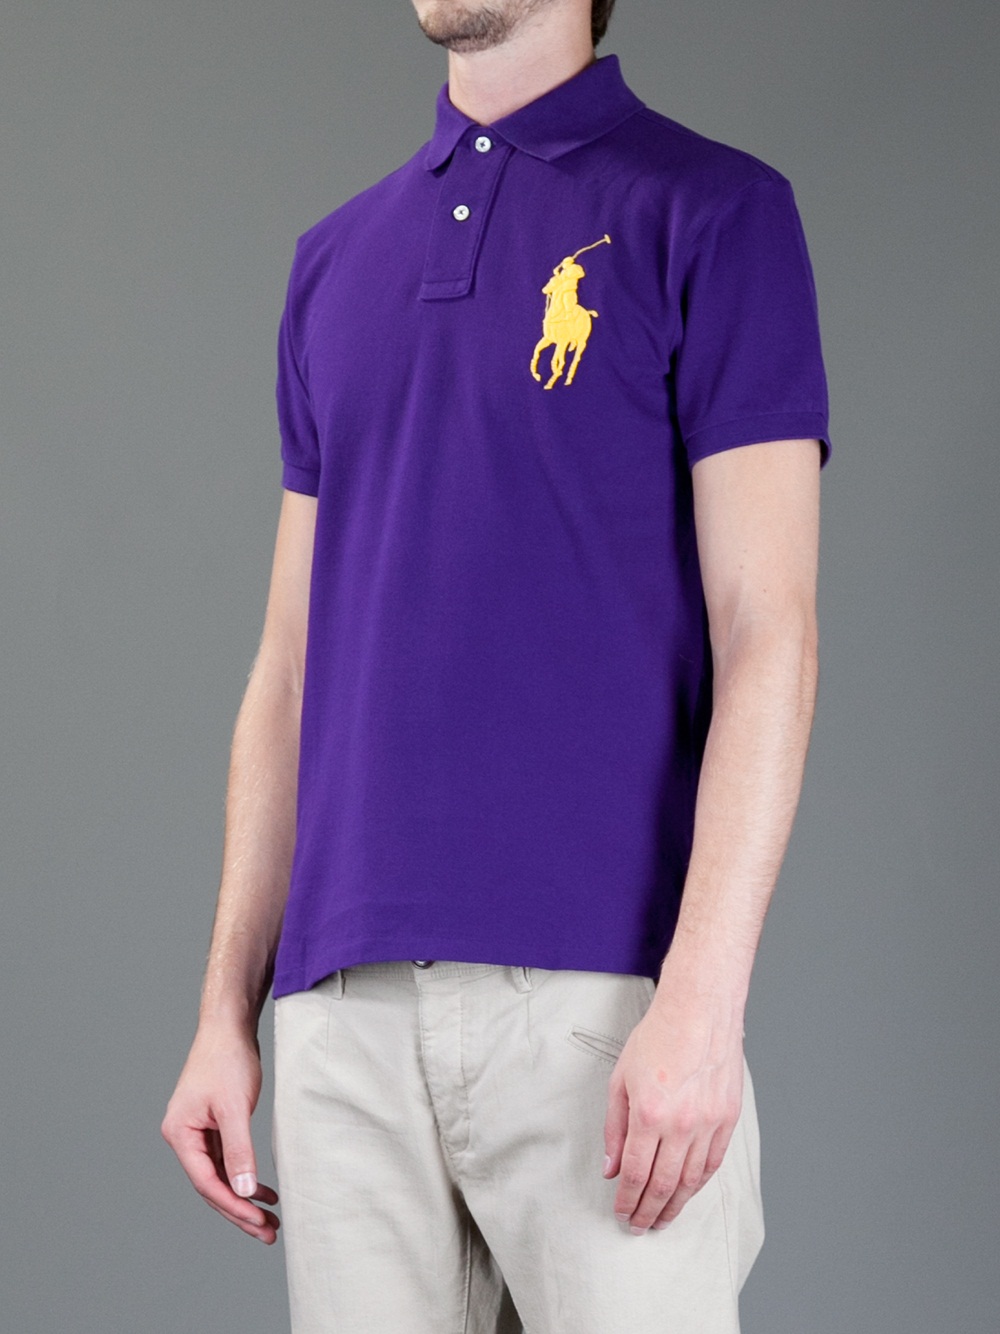 Lyst - Ralph Lauren Blue Label Logo Polo Shirt in Purple for Men